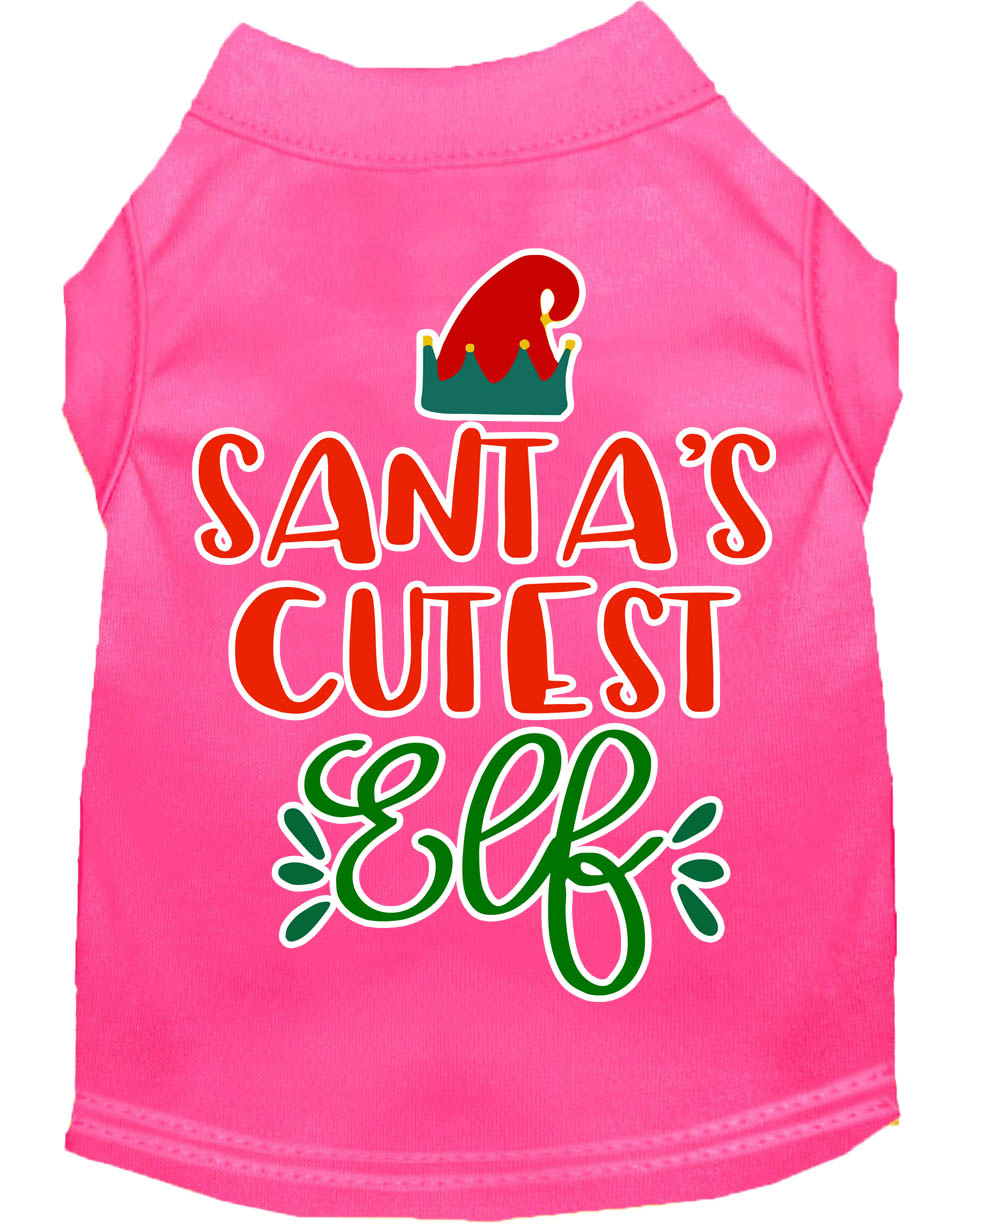 Santa's Cutest Elf Screen Print Dog Shirt Bright Pink Sm